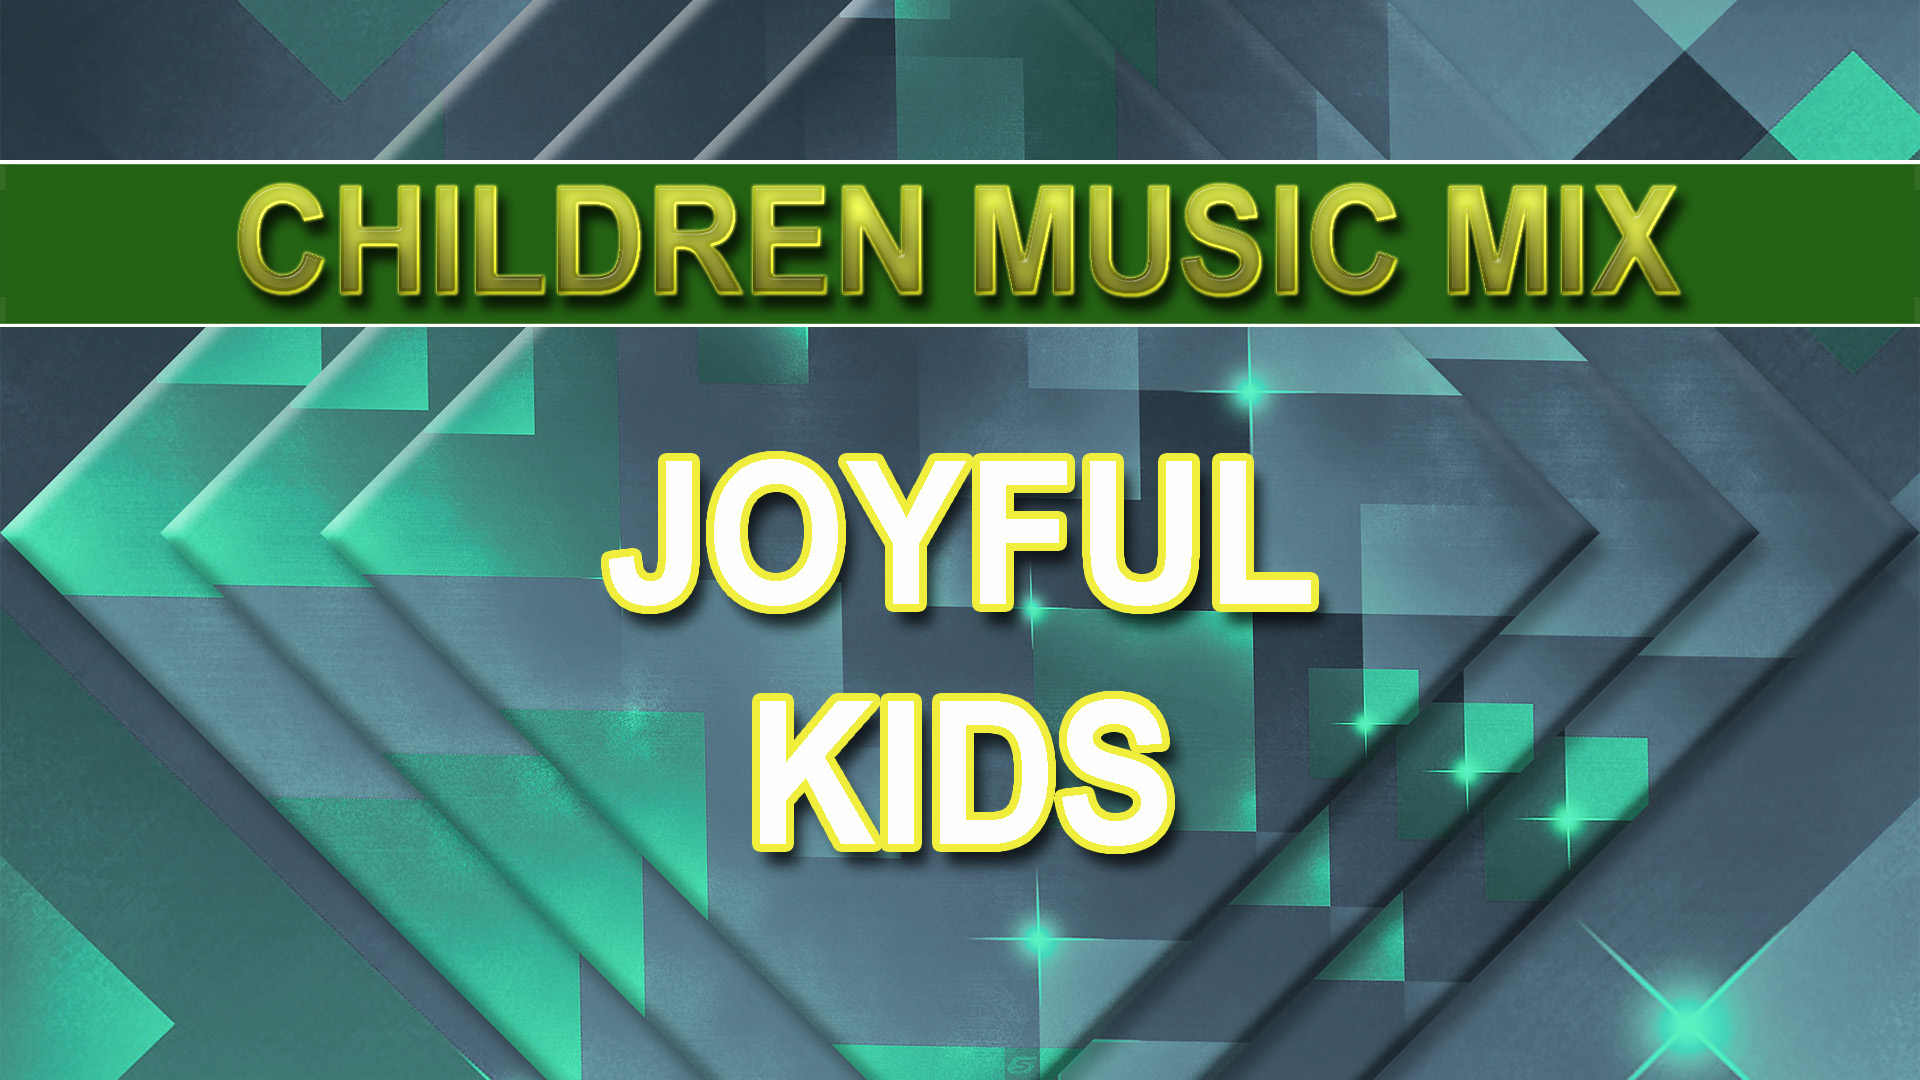 Joyful Kids (Children Music Mix)